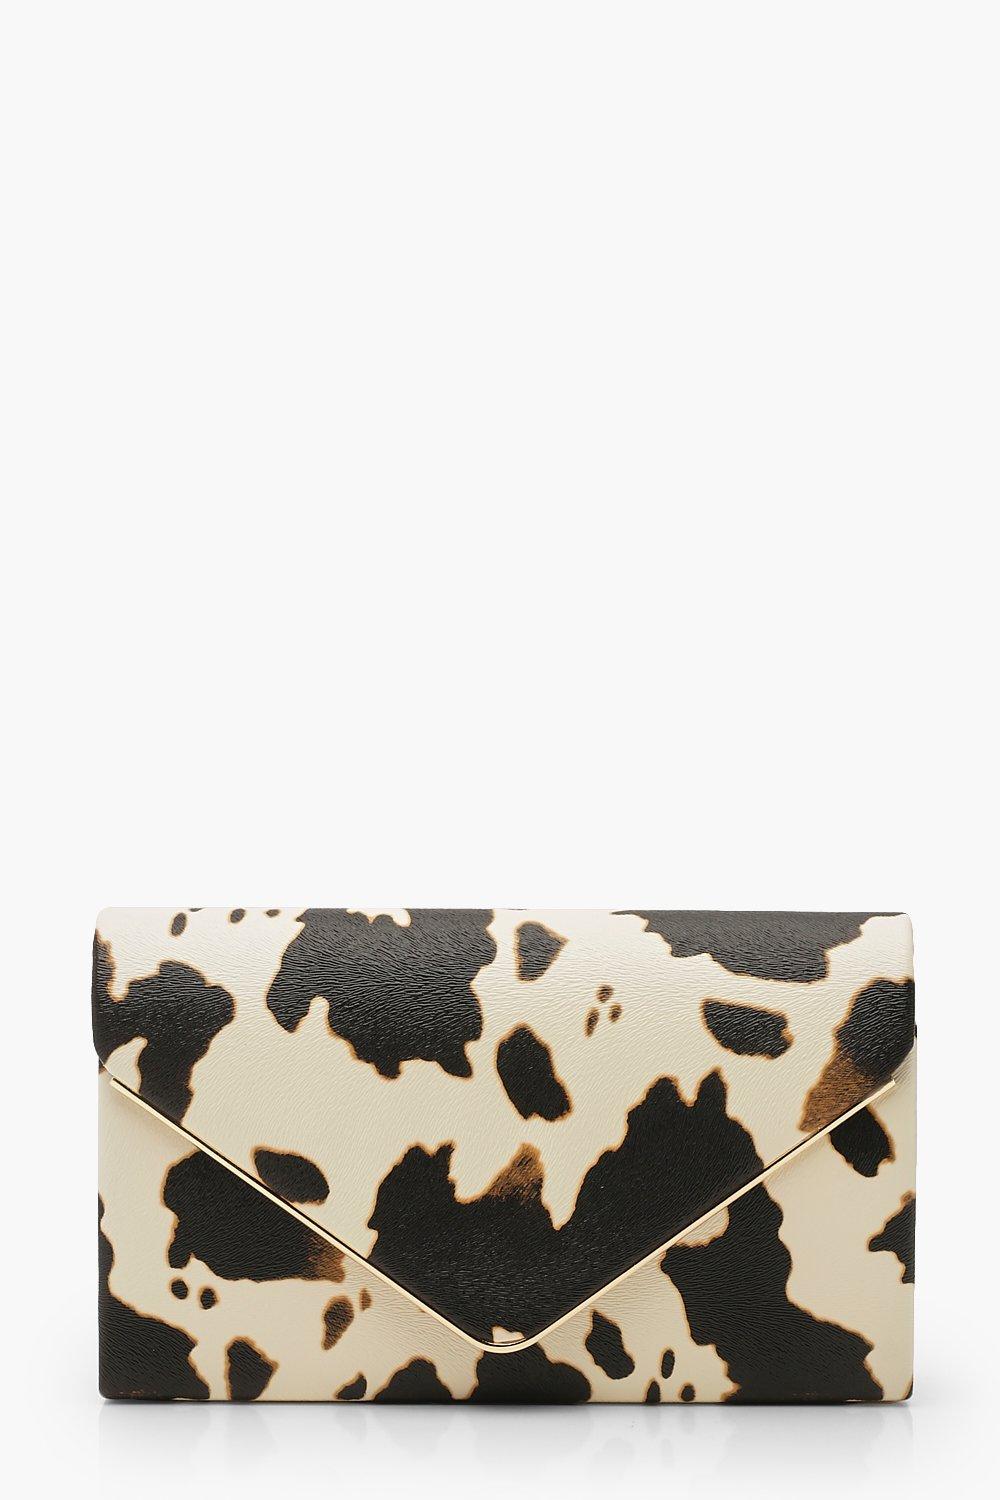 Cow Print Clutch Bag & Chain | Boohoo